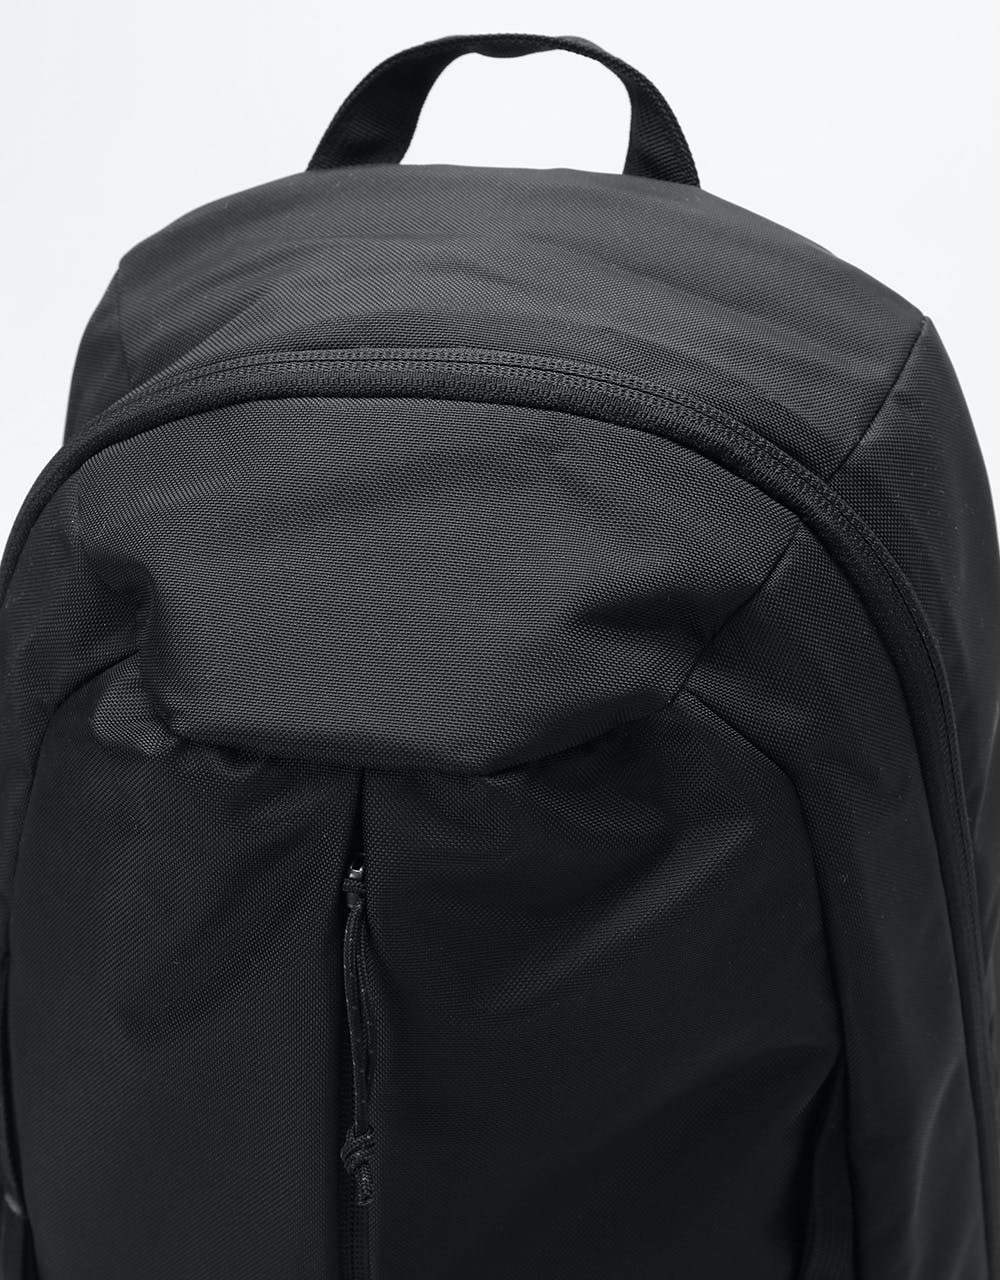 Patagonia Atom Pack 18L Backpack - Black